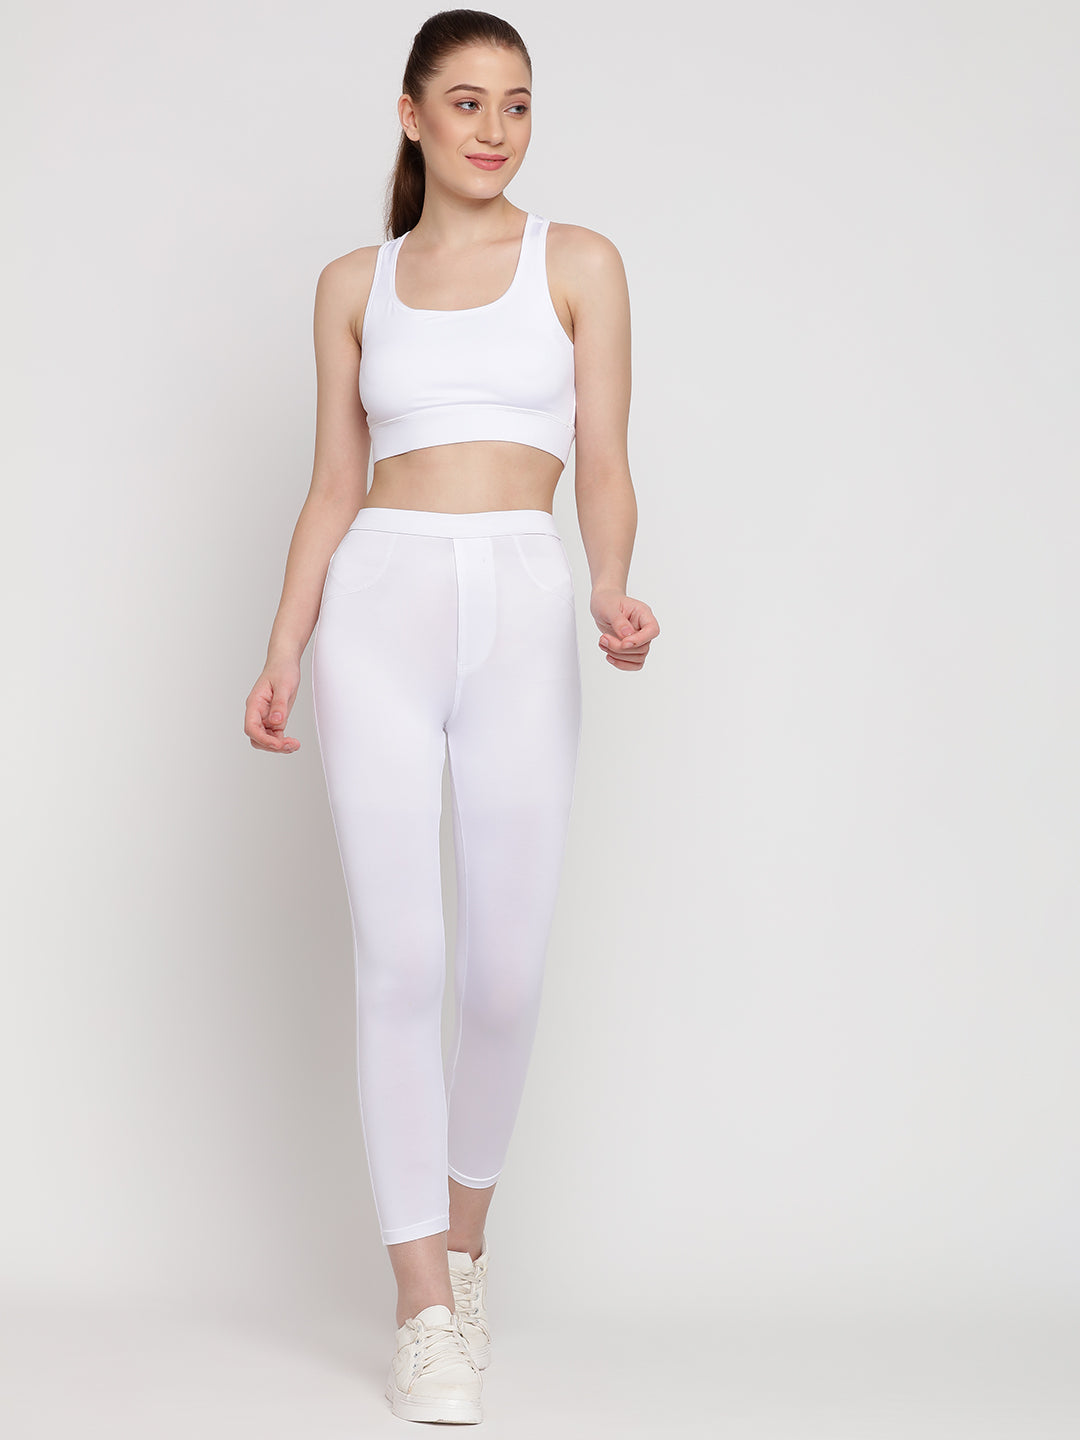 Flex Fit Pocket Tights 23” & Sports Bra Set - White